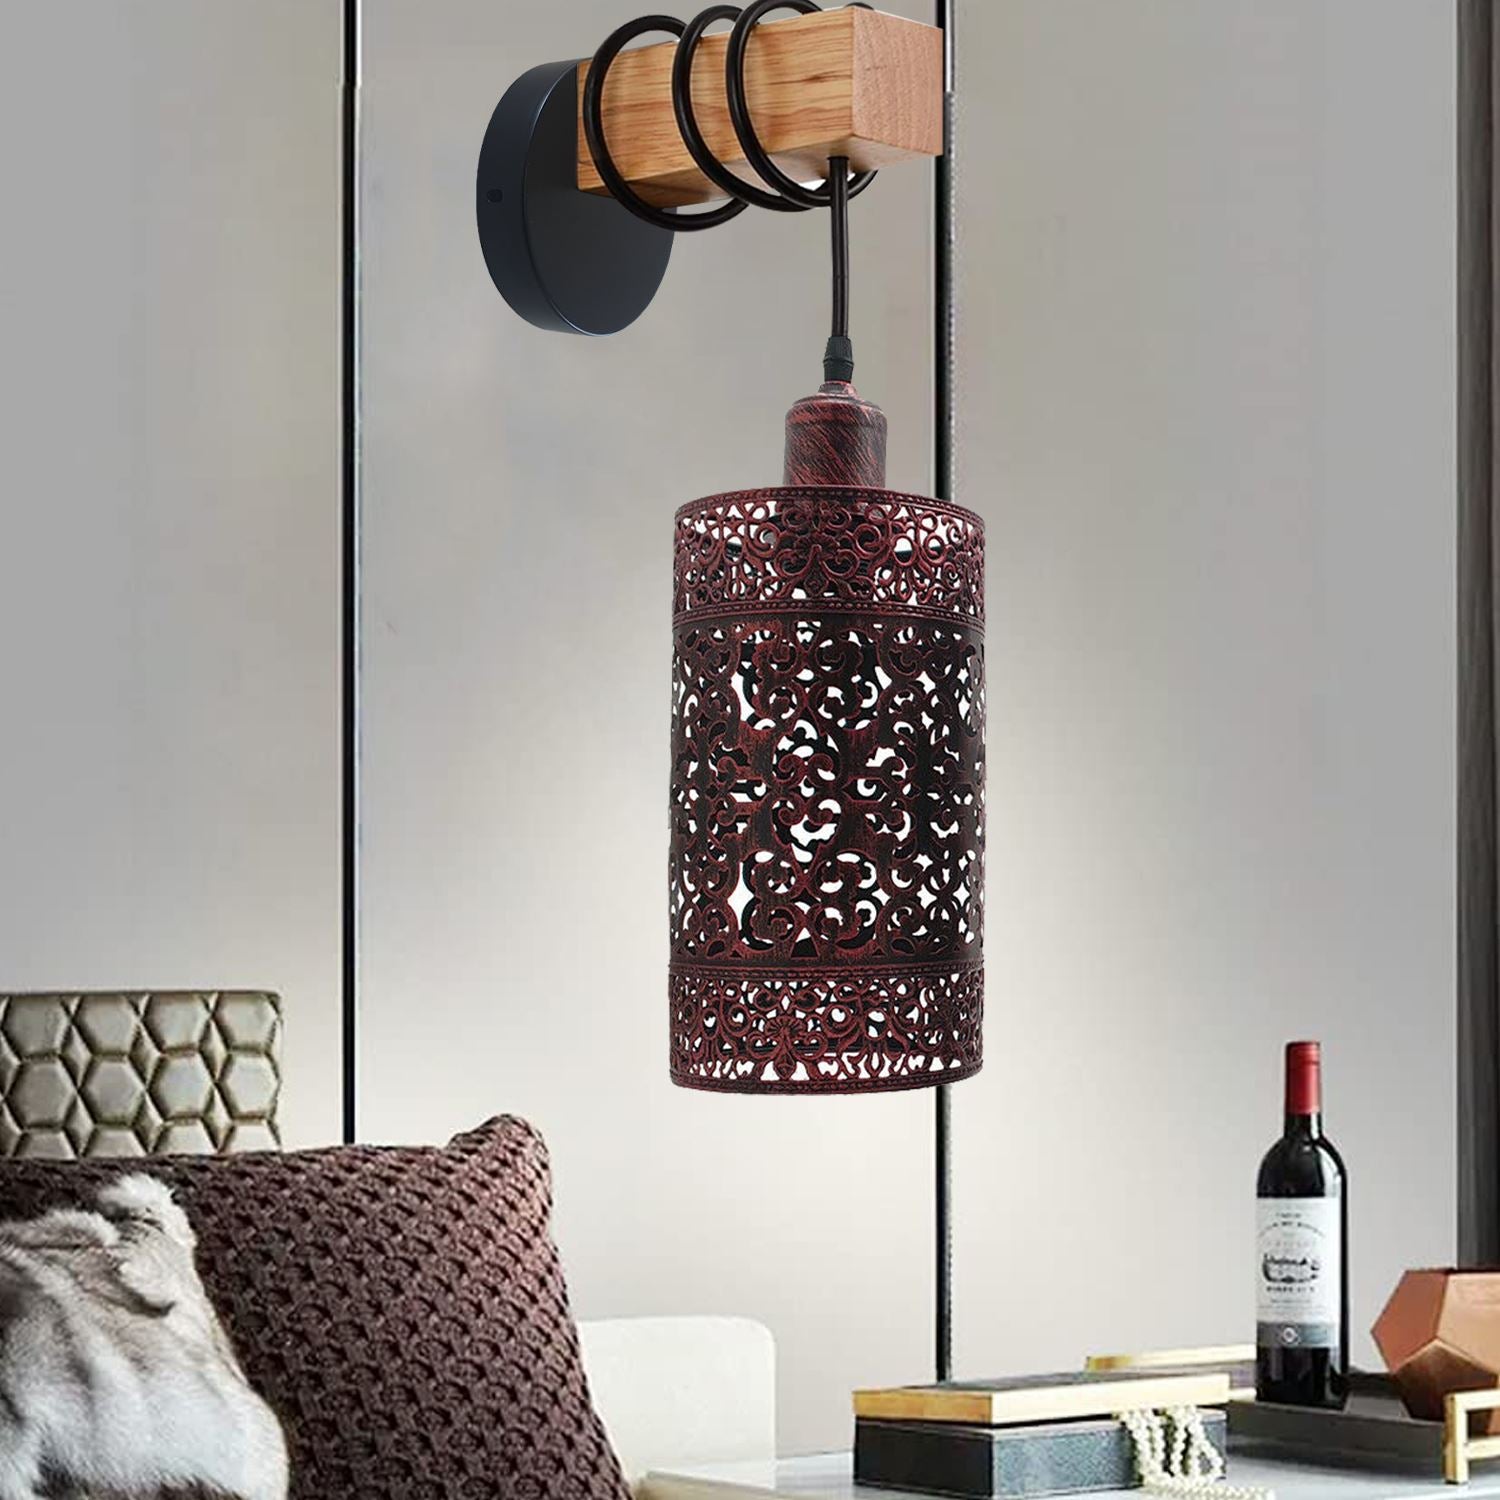 Wall Sconce Lighting Fixture Lamps Down Indoor Wooden Wall Lights Night Lamp for Living Room Bedroom Hallway~1312 - LEDSone UK Ltd